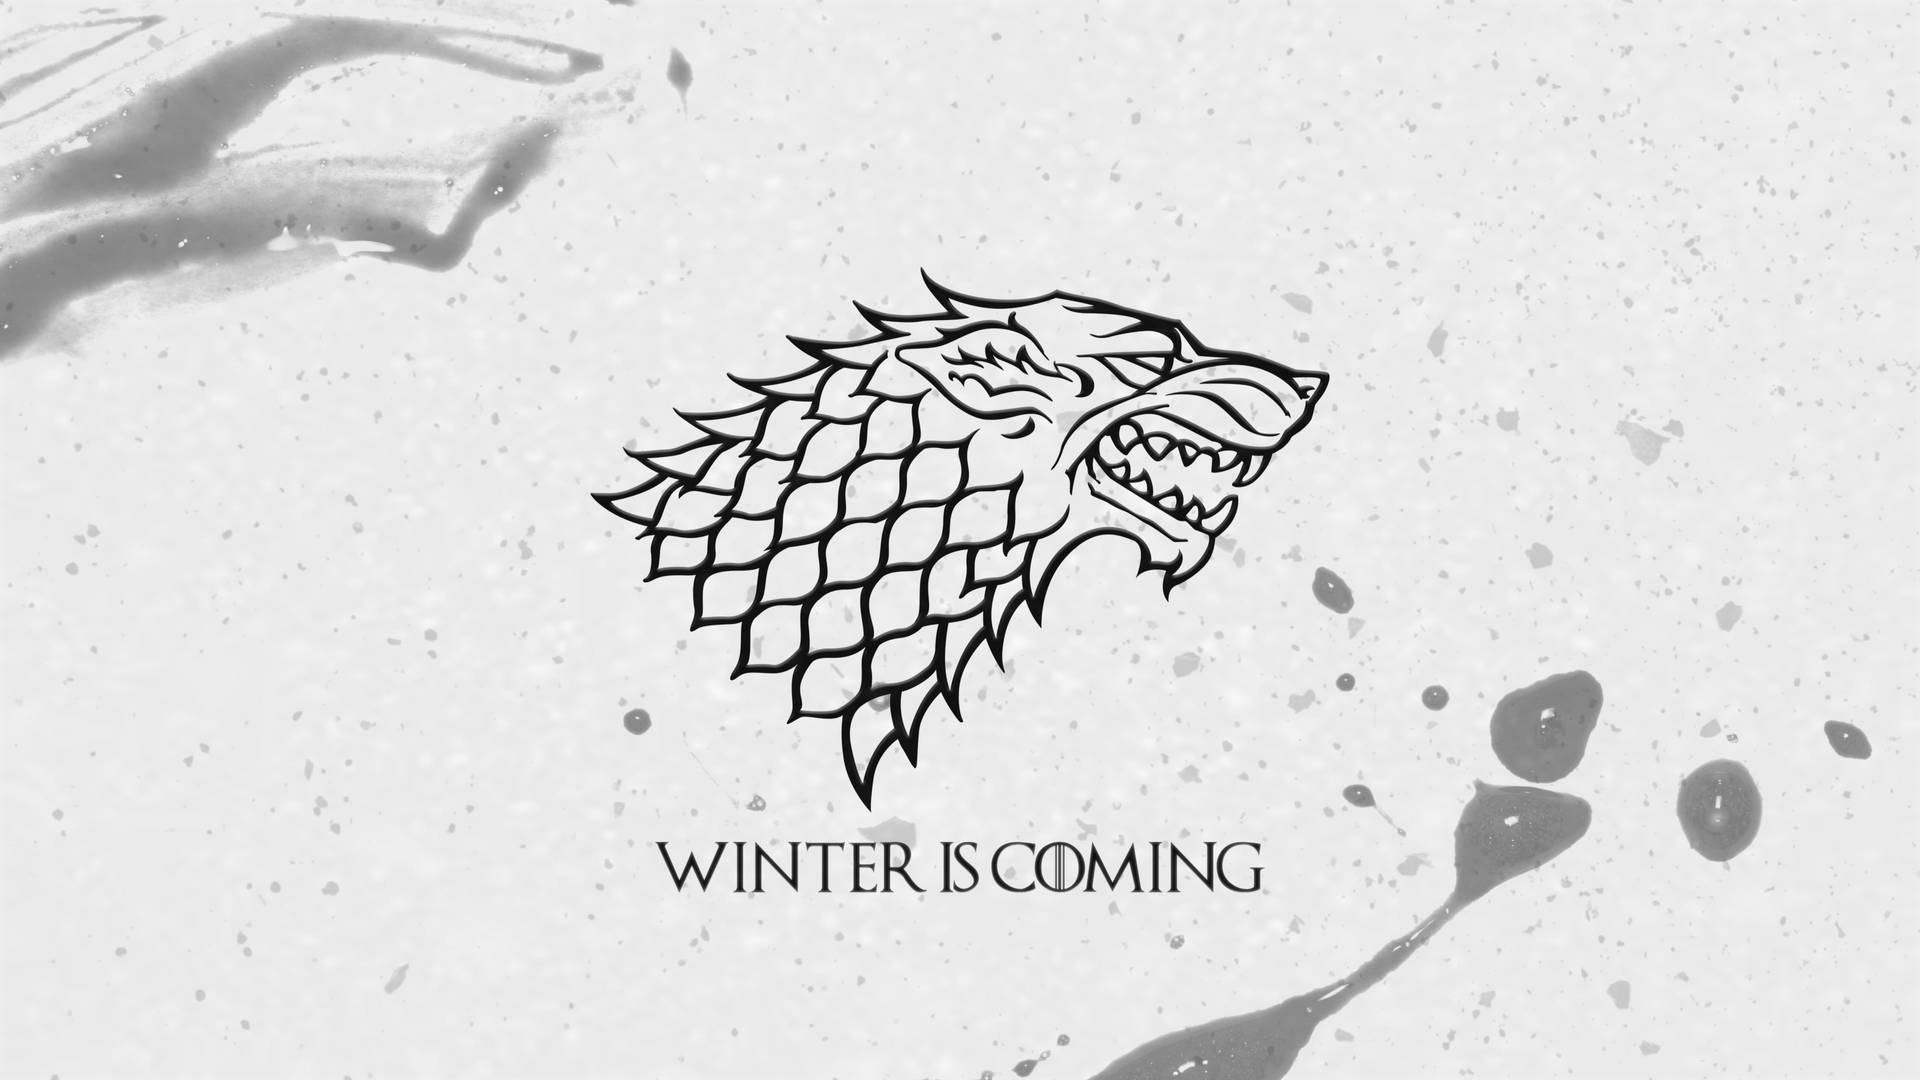 House Stark Winter Is Coming Fanart